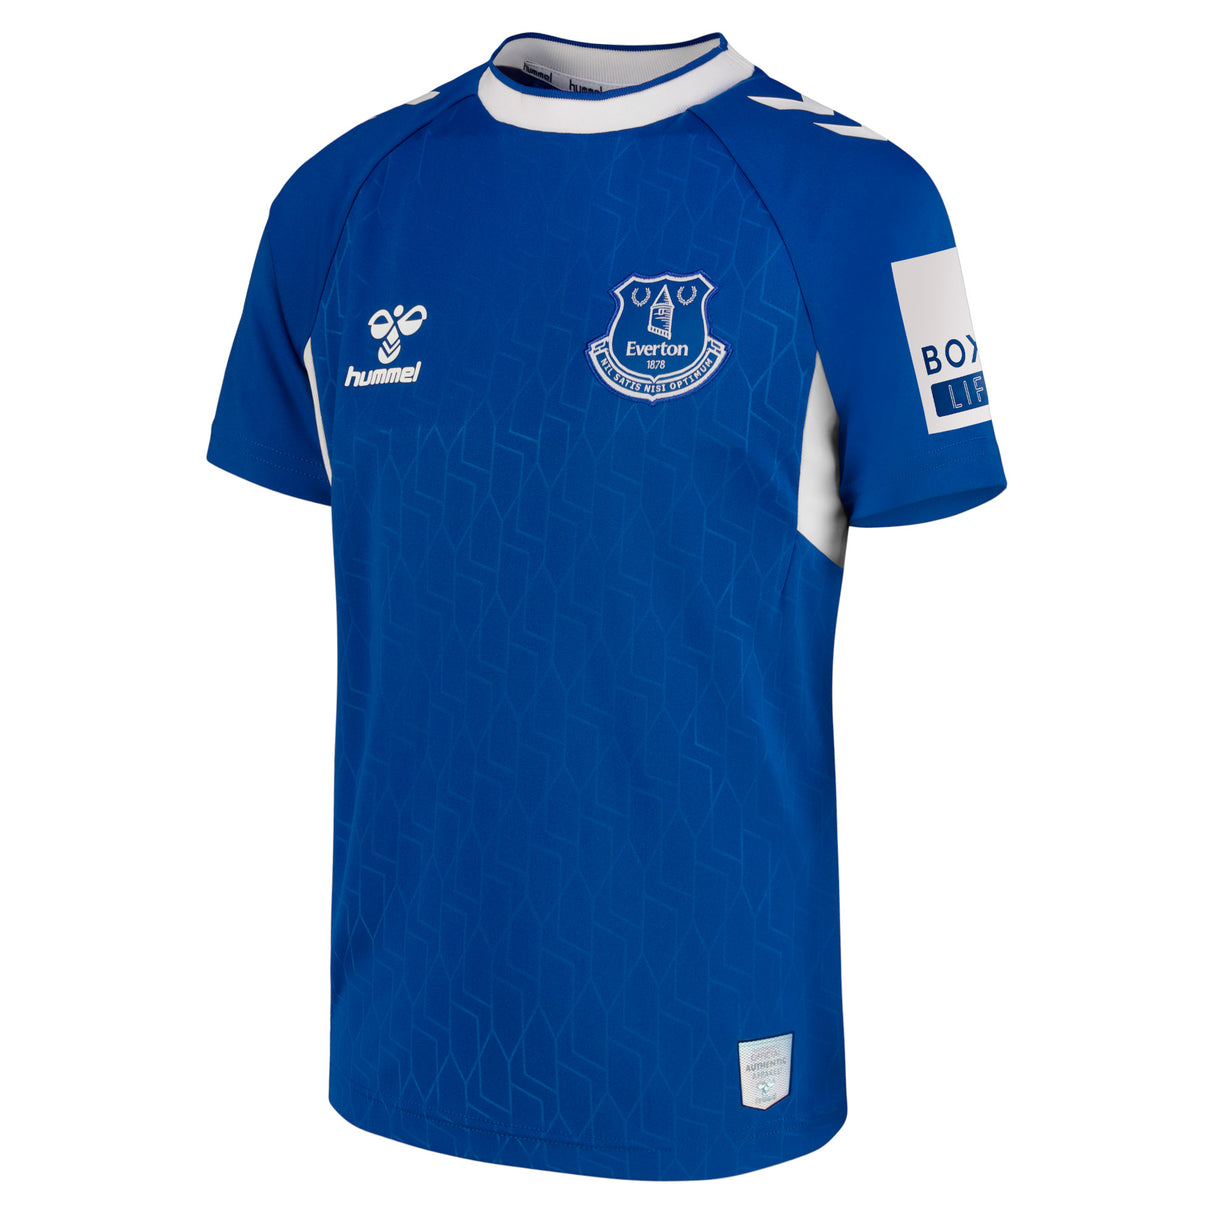 Everton WSL Home Shirt 2022-23 - Kids with Duggan 9 printing - Kit Captain